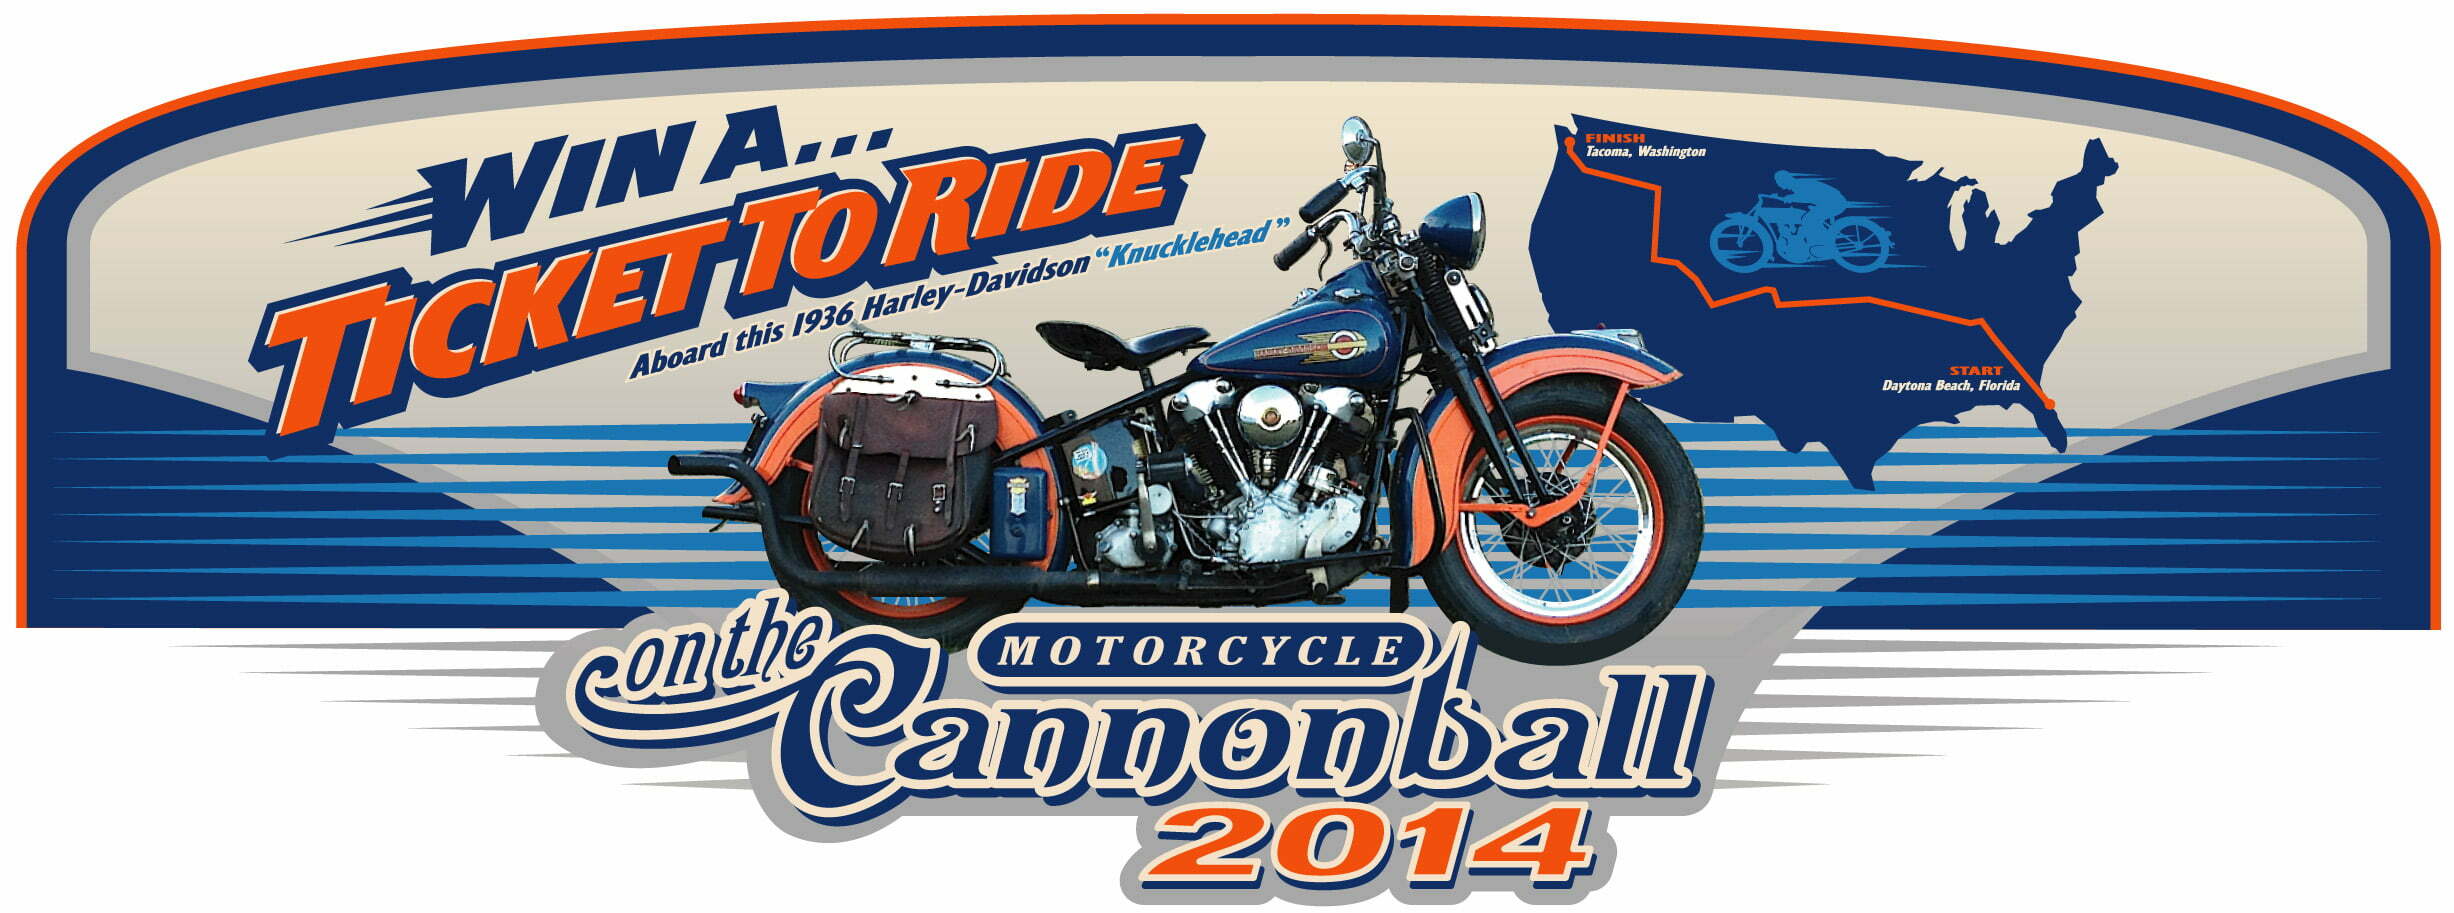 Cannonball ticket logo